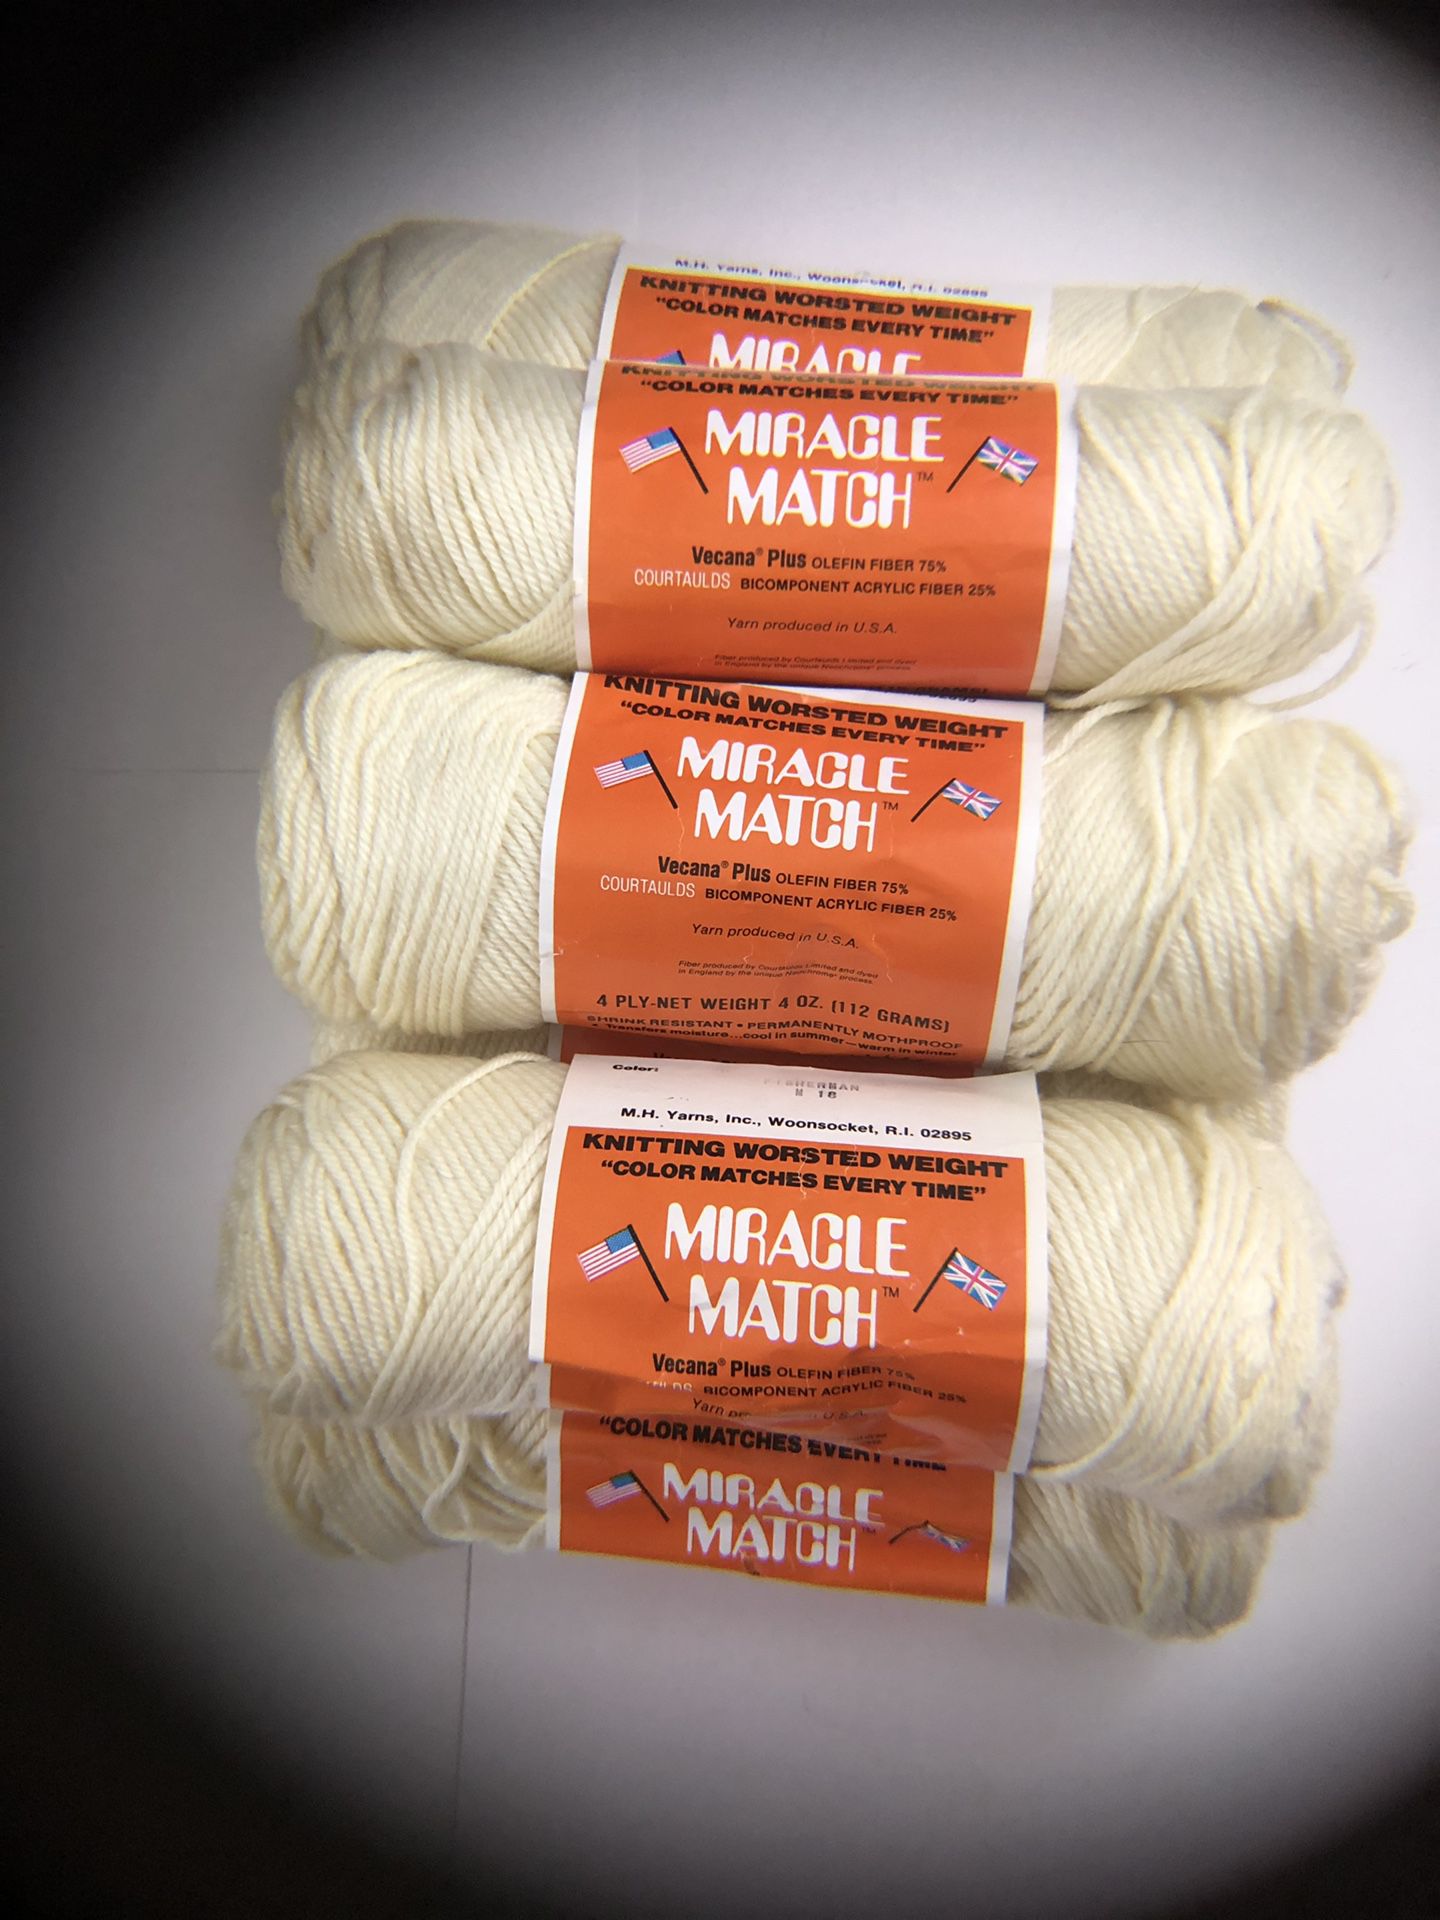 Lot of Miracle Match Knitting Worsted Weight Yarn Vecana Plus Olefin Fiber 75% Bicomponent Acrylic Fiber 25%